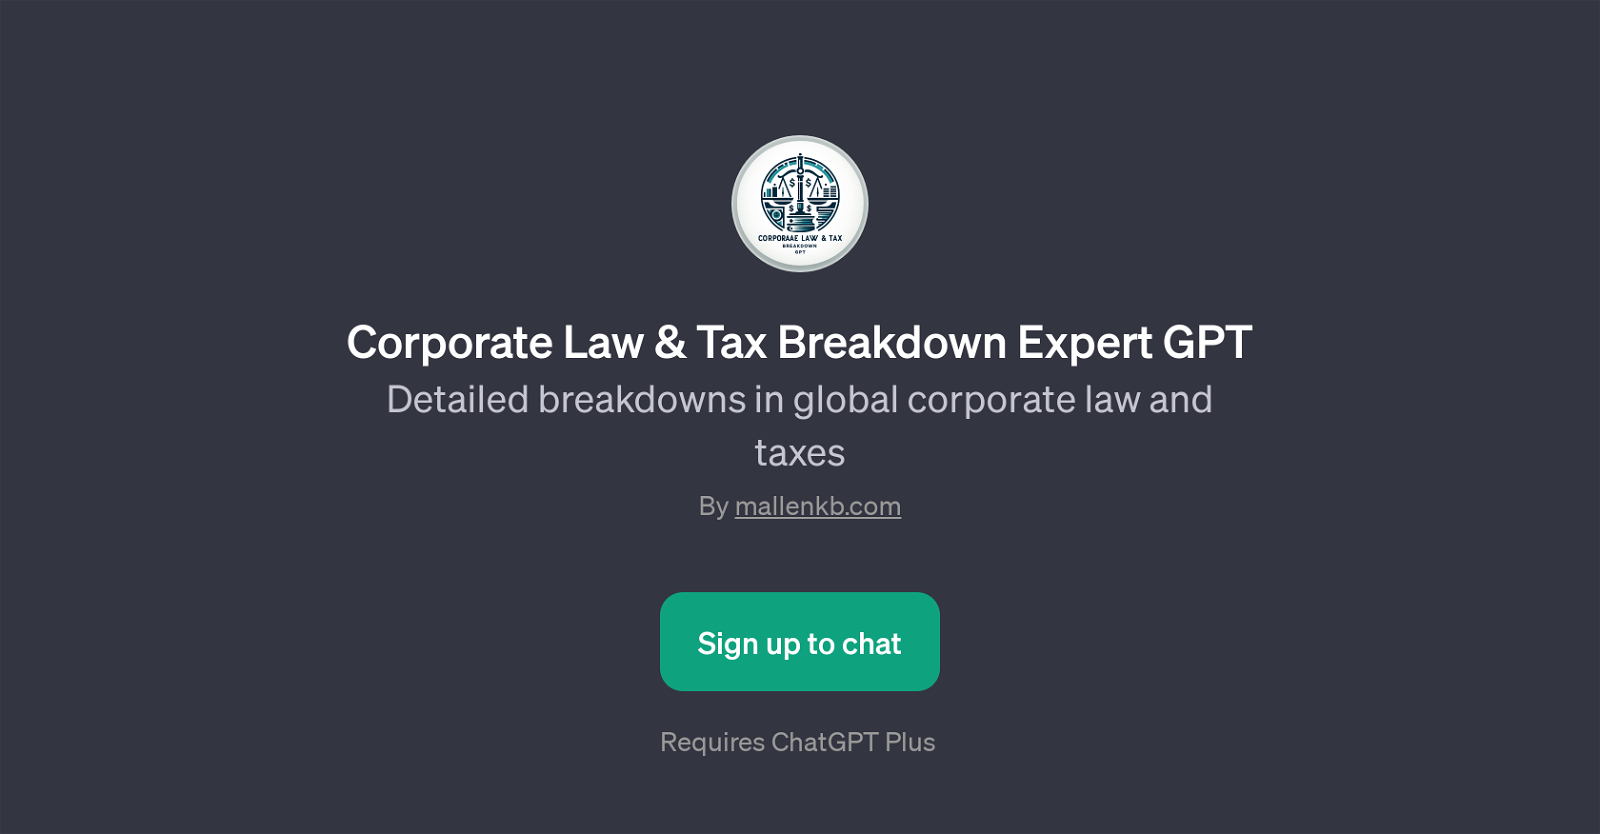 Corporate Law & Tax Breakdown Expert GPT website